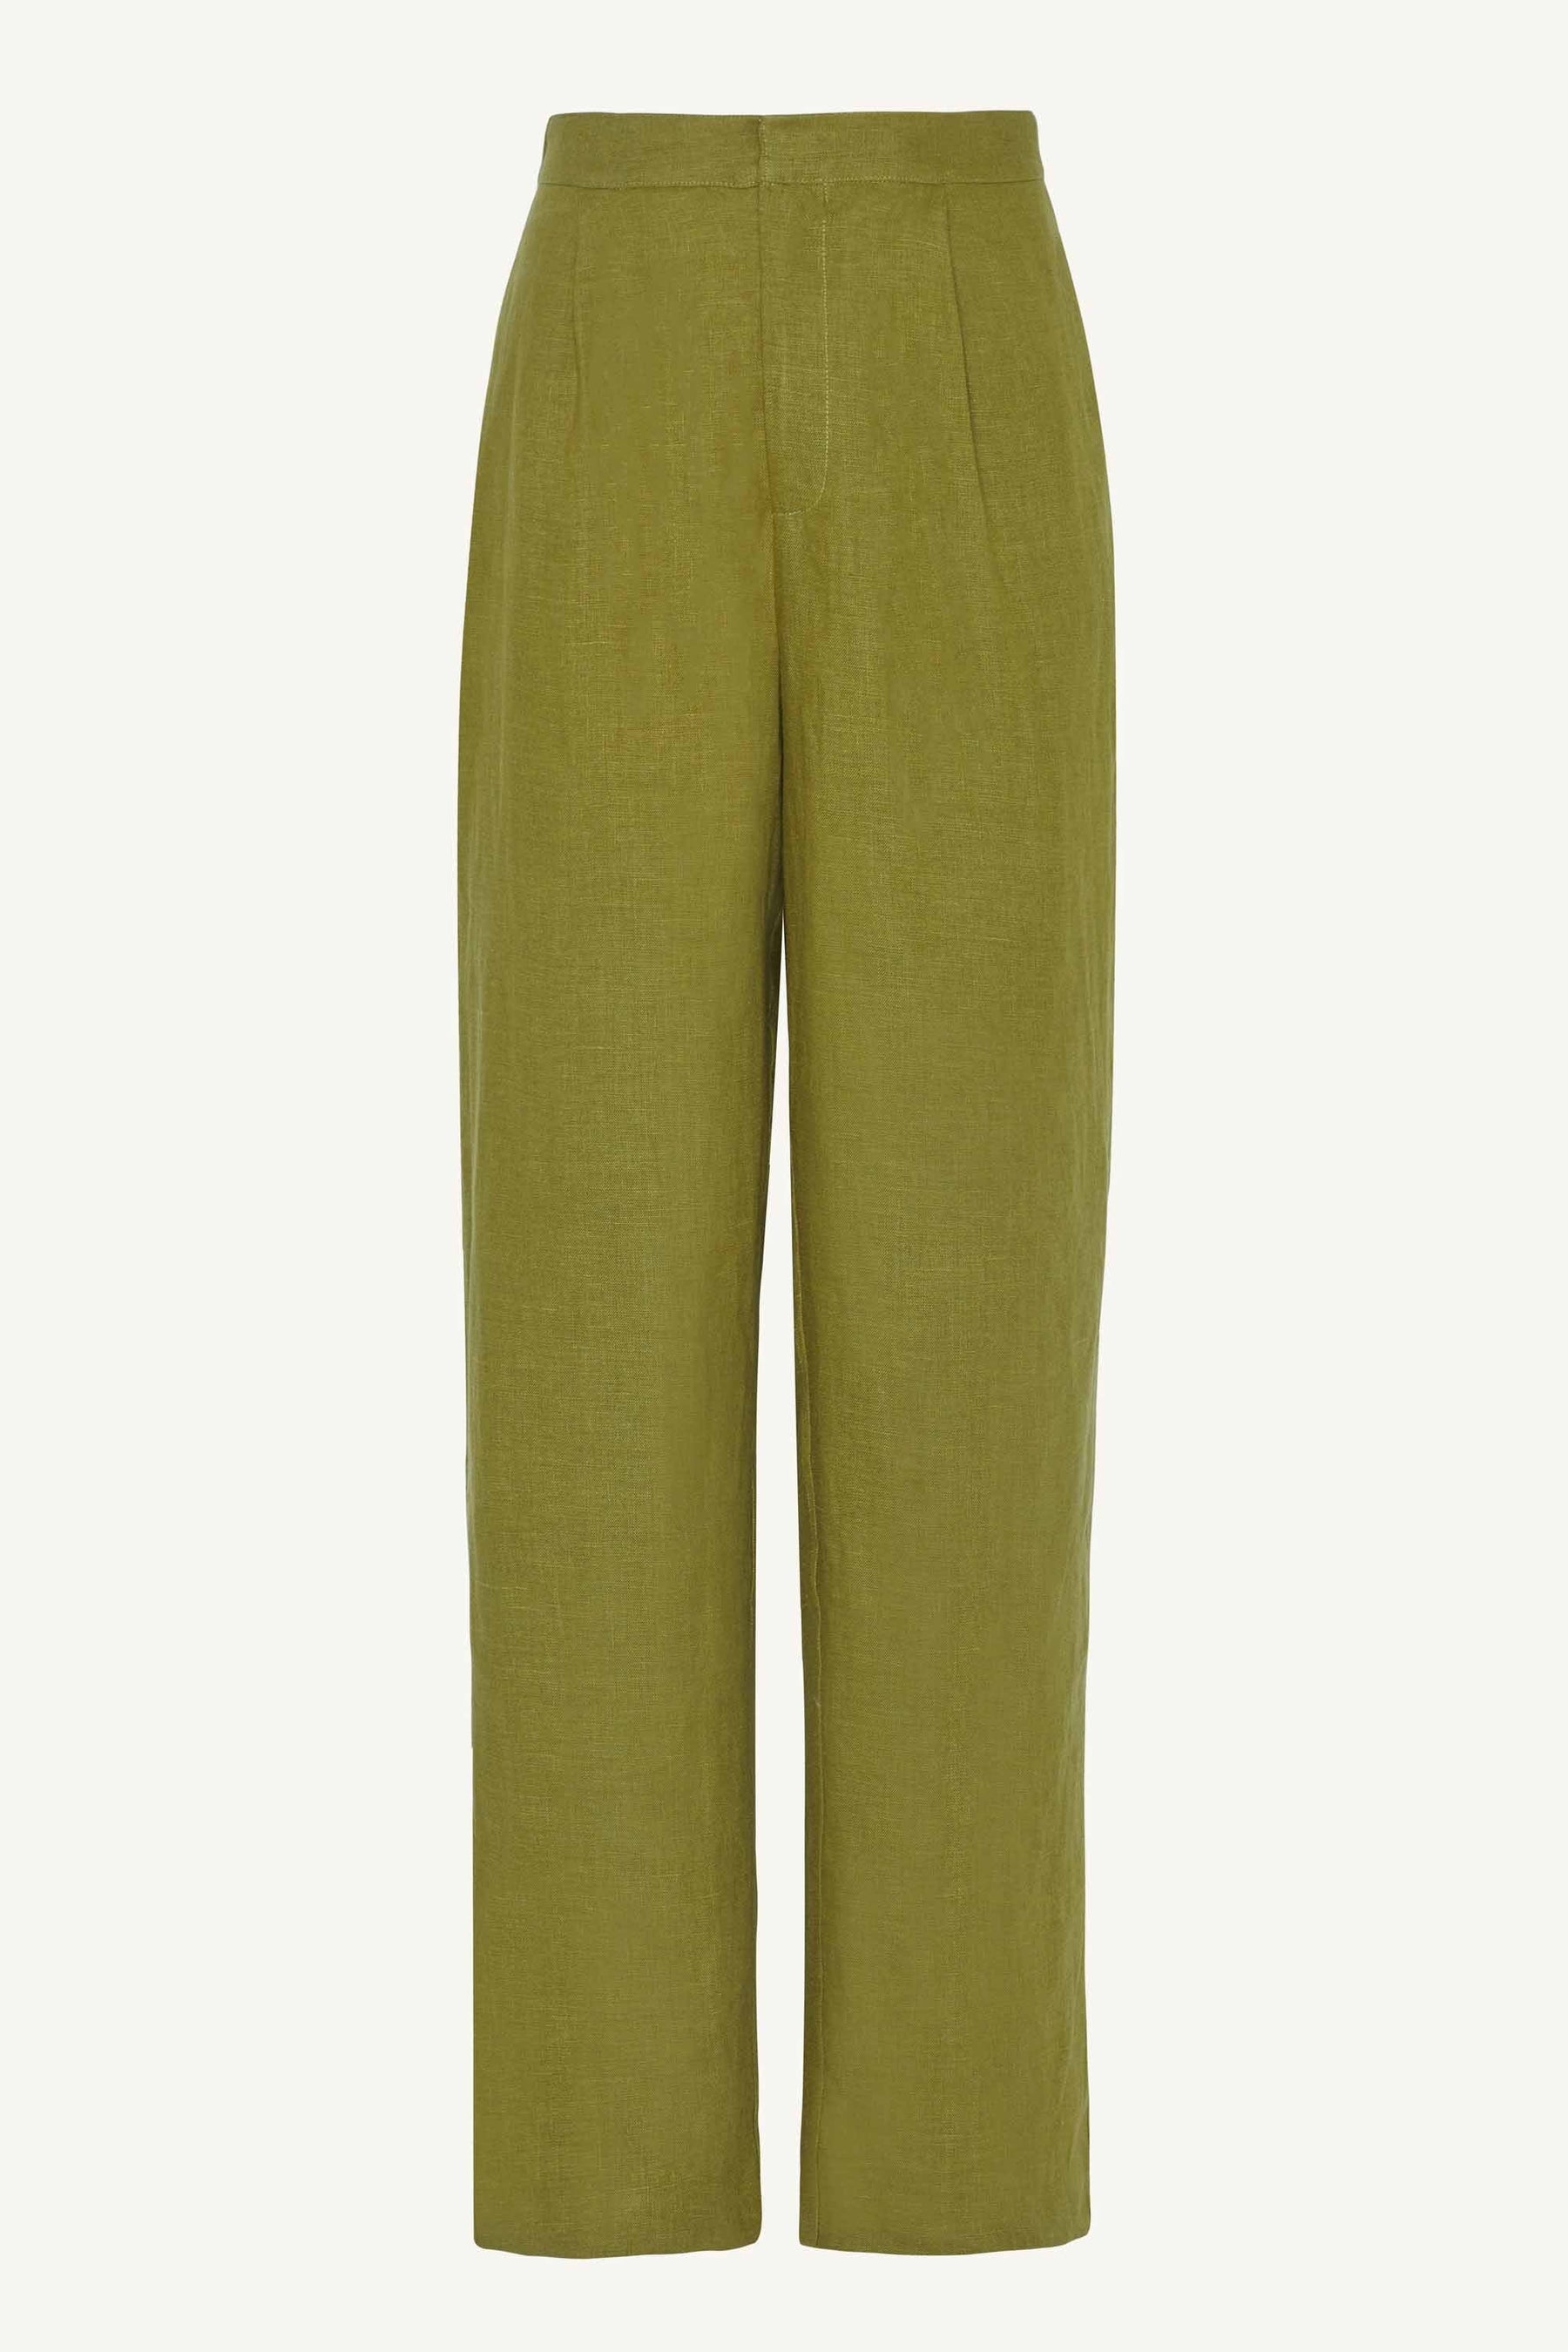 Linen Straight Leg Pants - Avocado Clothing Veiled Collection 